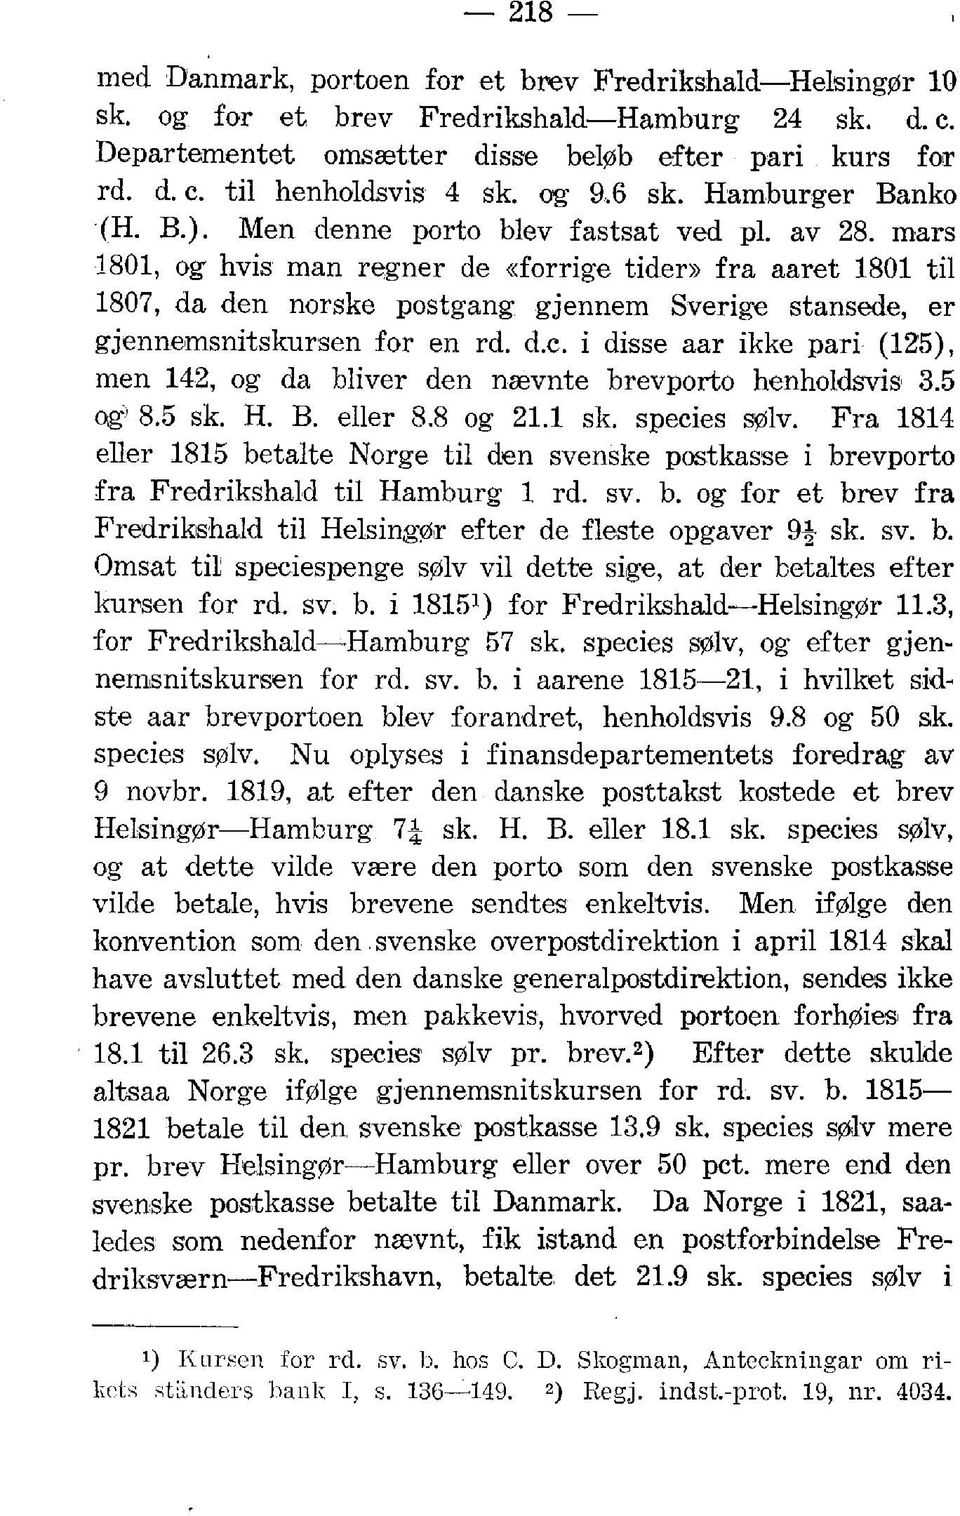 mars 1801, og hvis man regner de «forrige tider» fra aaret 1801 til 1807, da den norske postgang gjennem Sverige stansede, er gjennemsnitskursen for en rd. d.c.